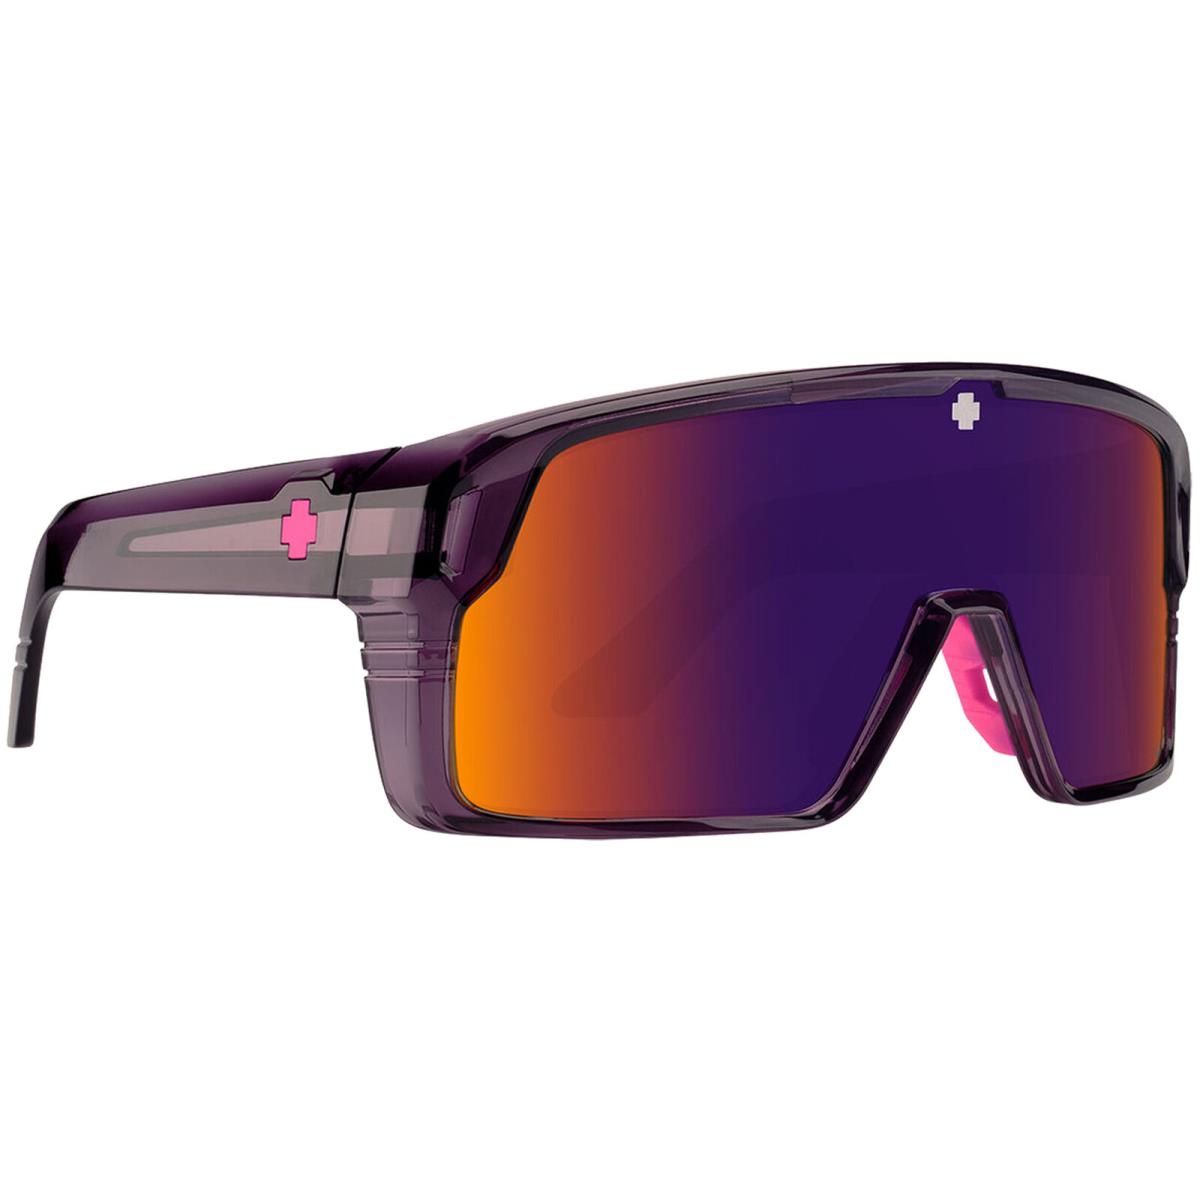 Spy Optics Monolith Sport Shield Sunglasses w/ Locking Hinges - Made in Taiwan Dk Purple/Gray Green & Dk Purple Spectra (190)